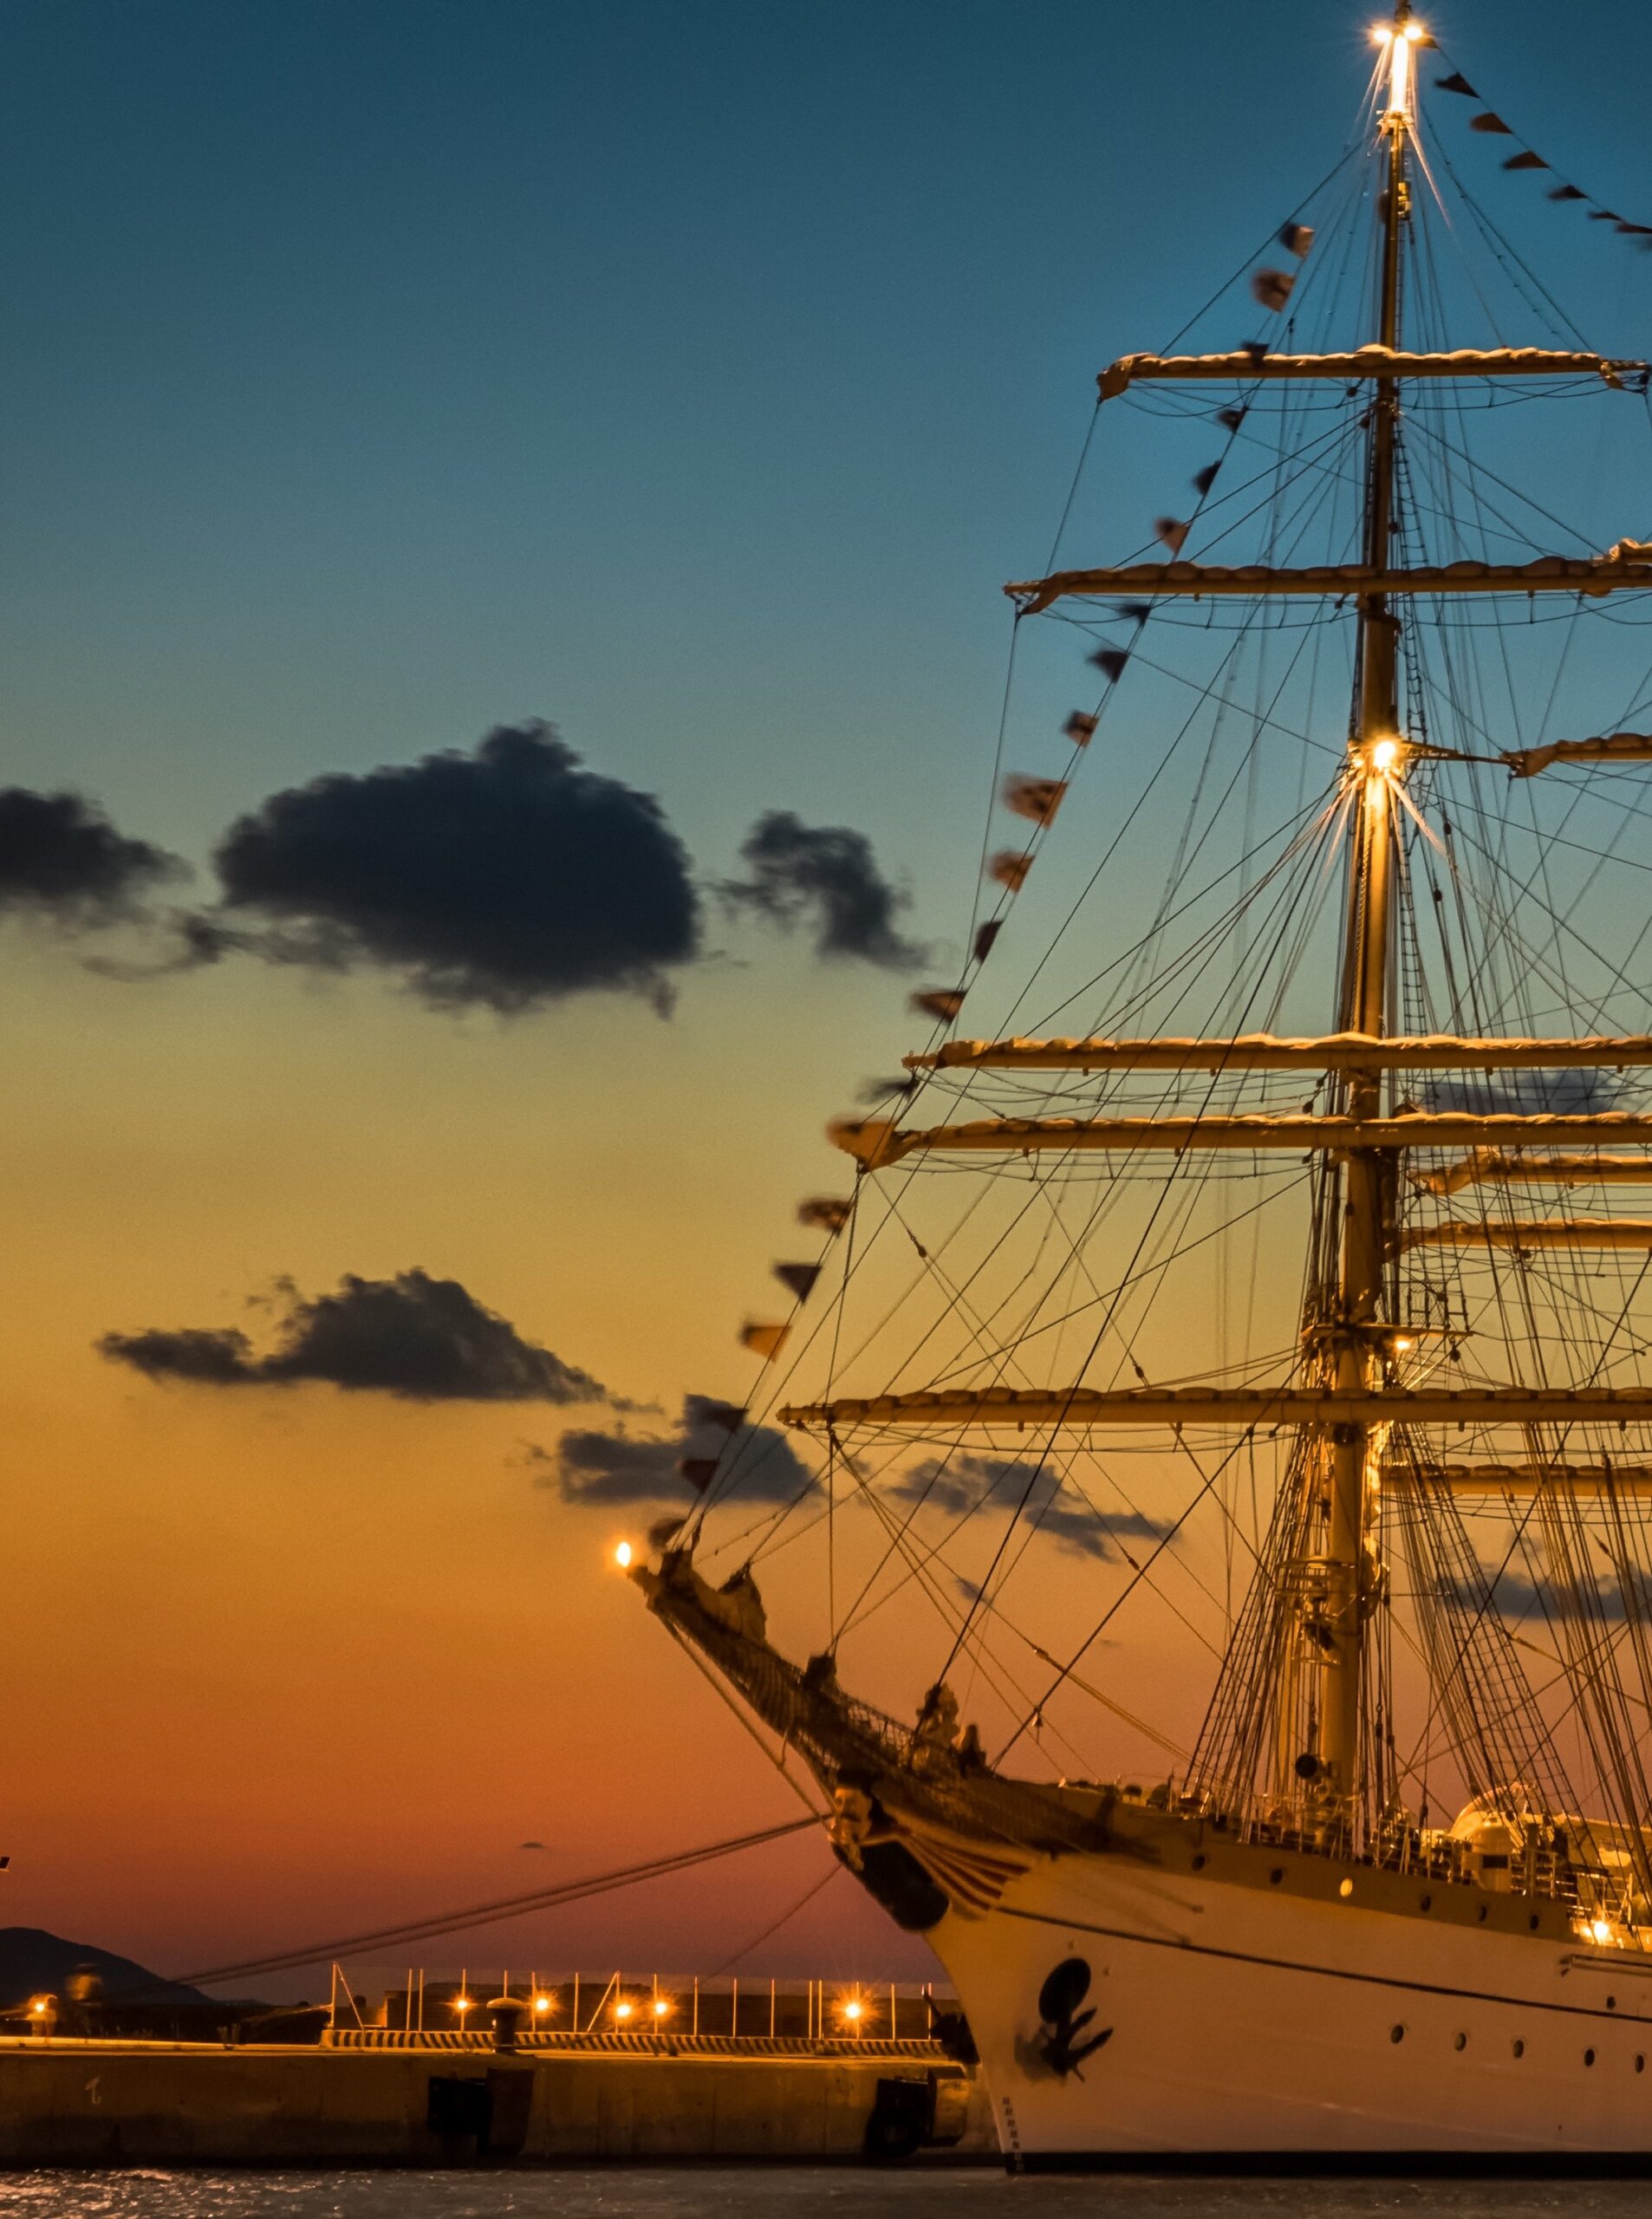 Ship at sunset